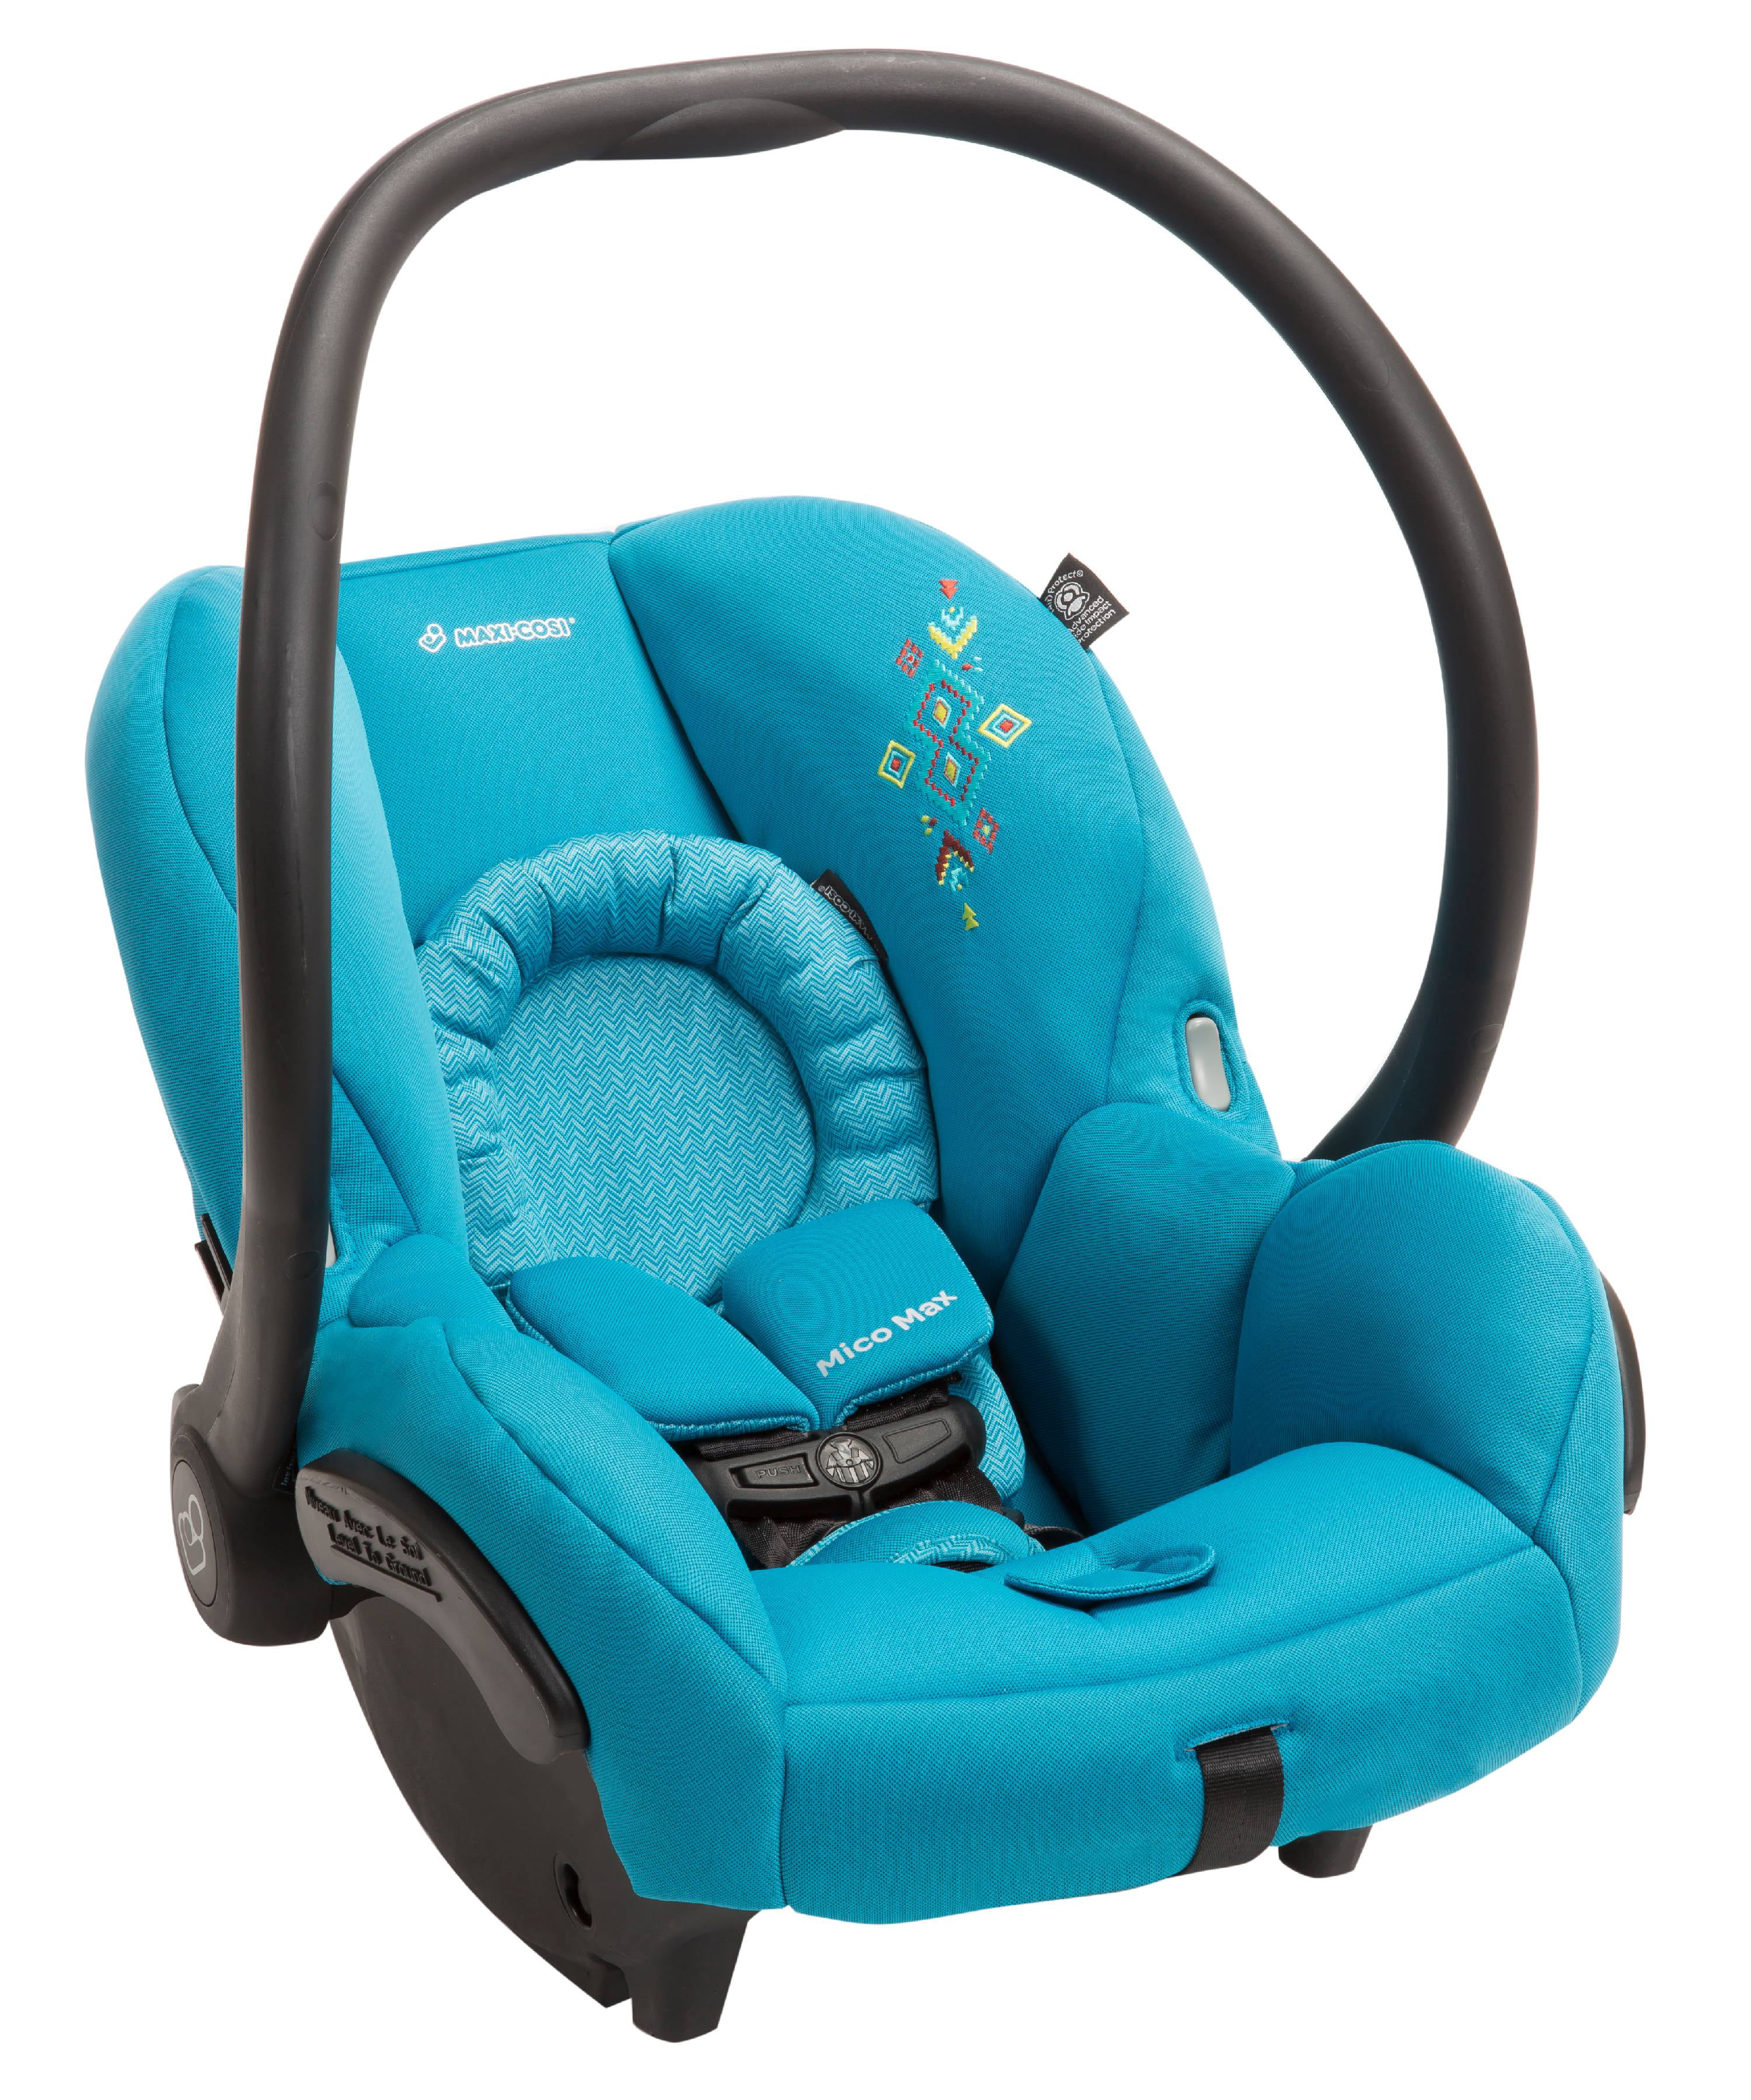 Maxi Cosi Mico Max 30 Infant Car Seat, Mosaic Blue